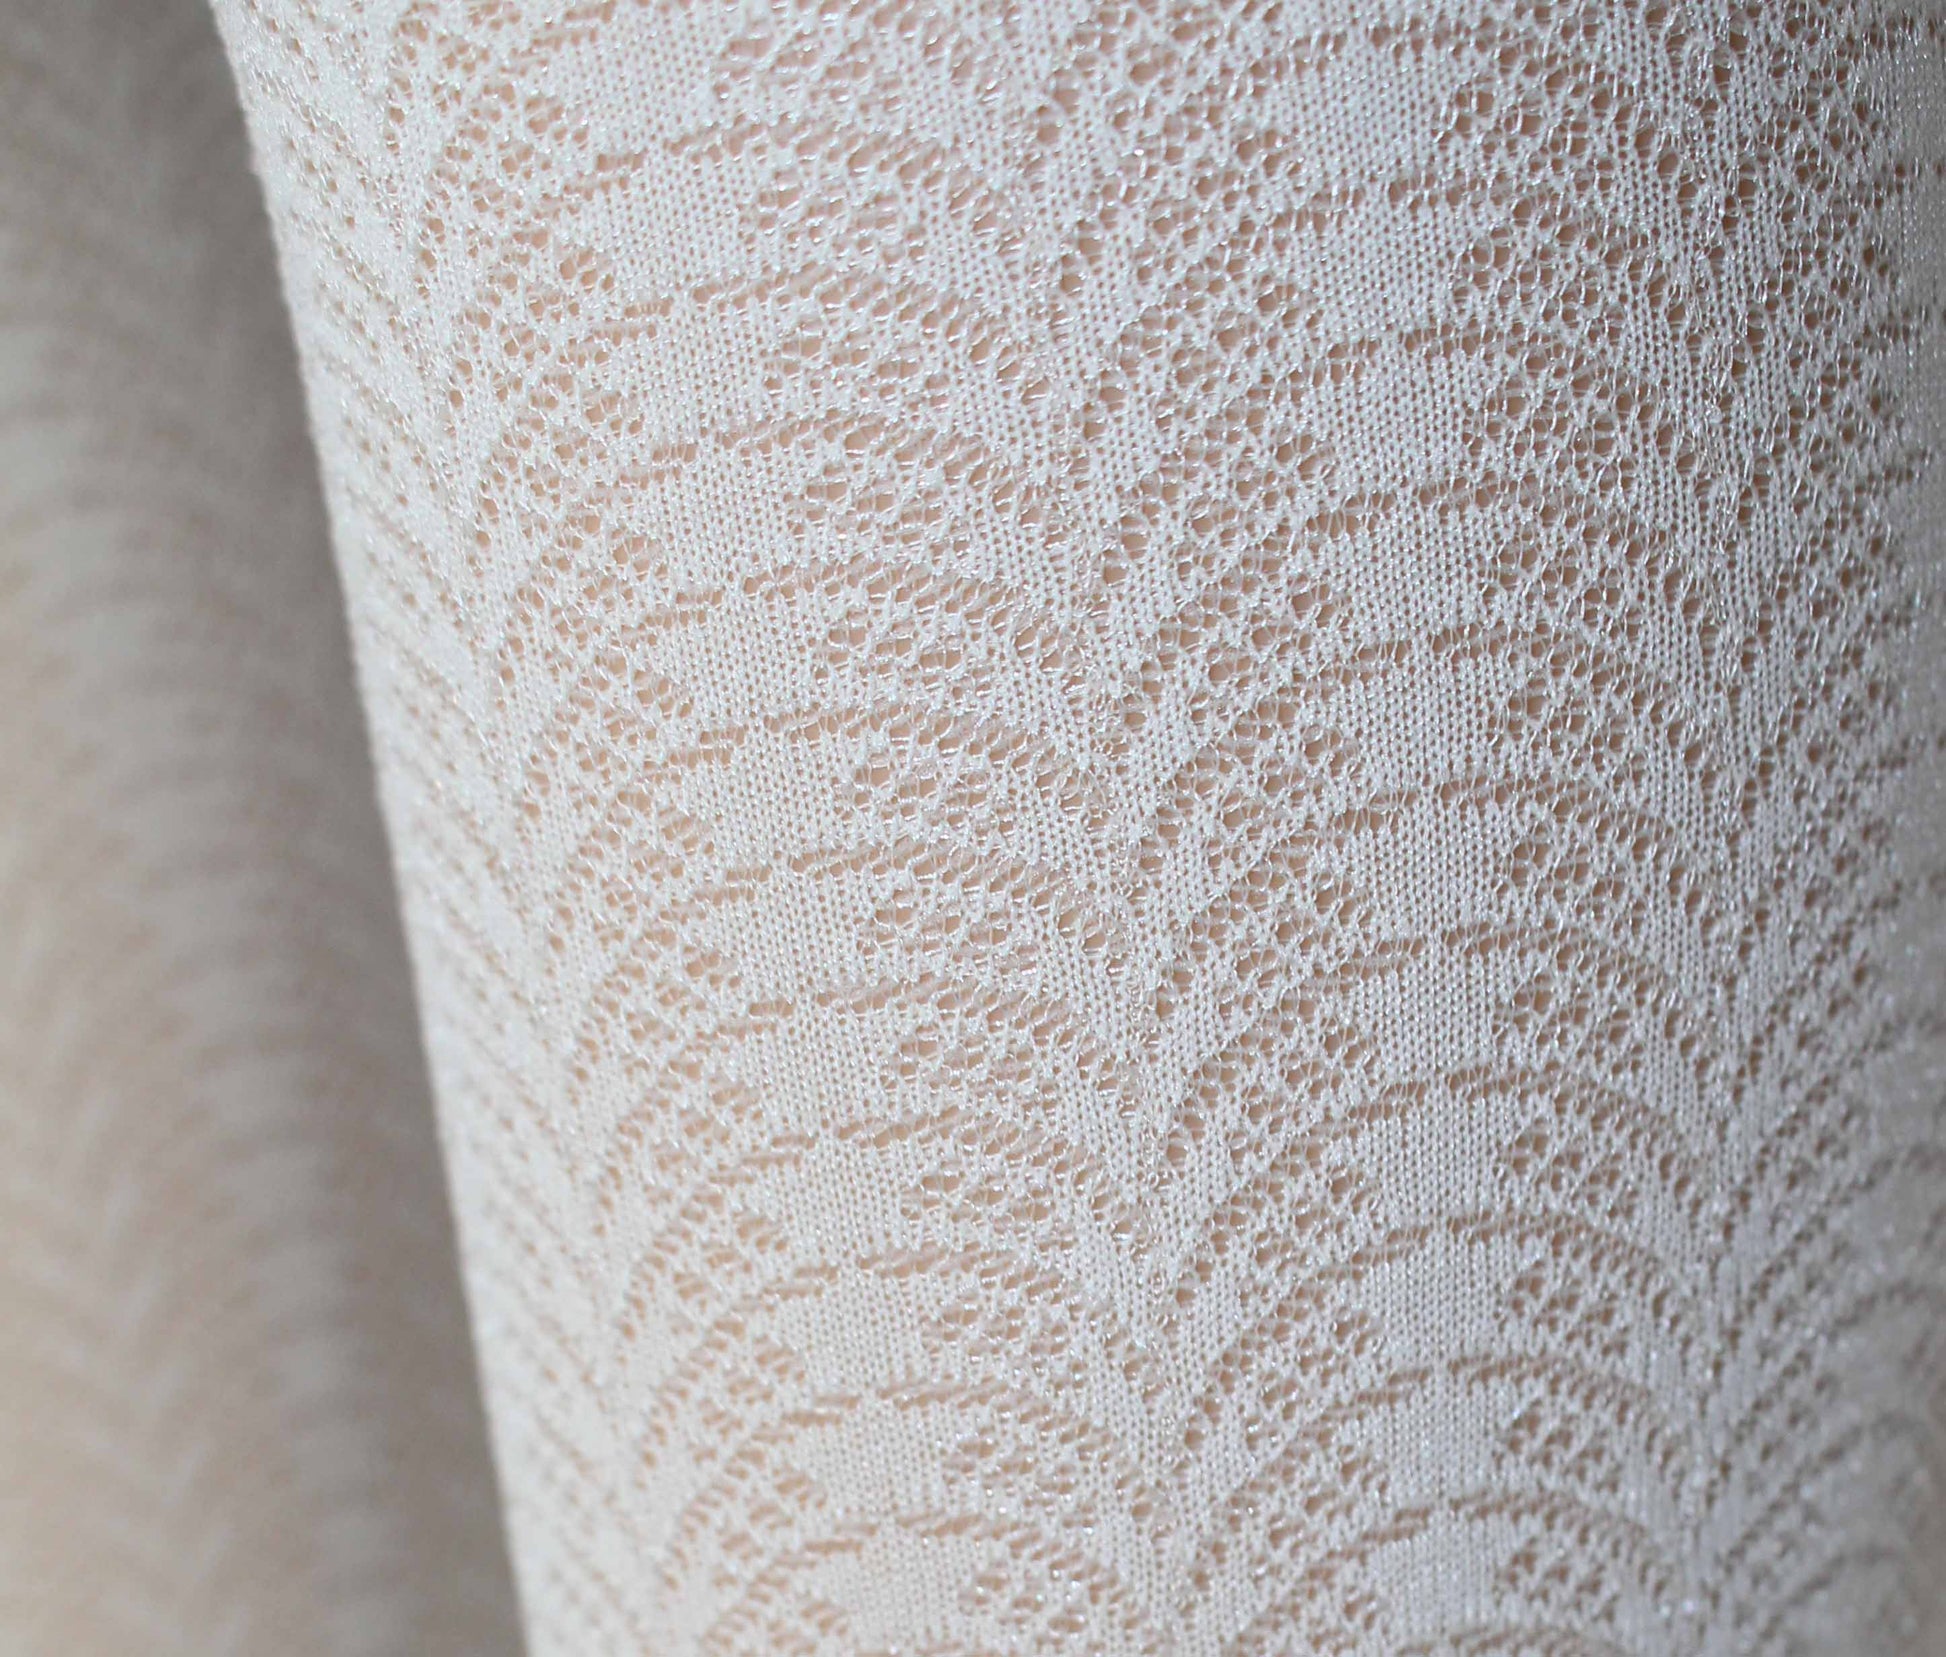 Omsa Serenella Delice Children's tights - Cream Semi opaque Kid's fashion tights with a woven circular linear lace style pattern.